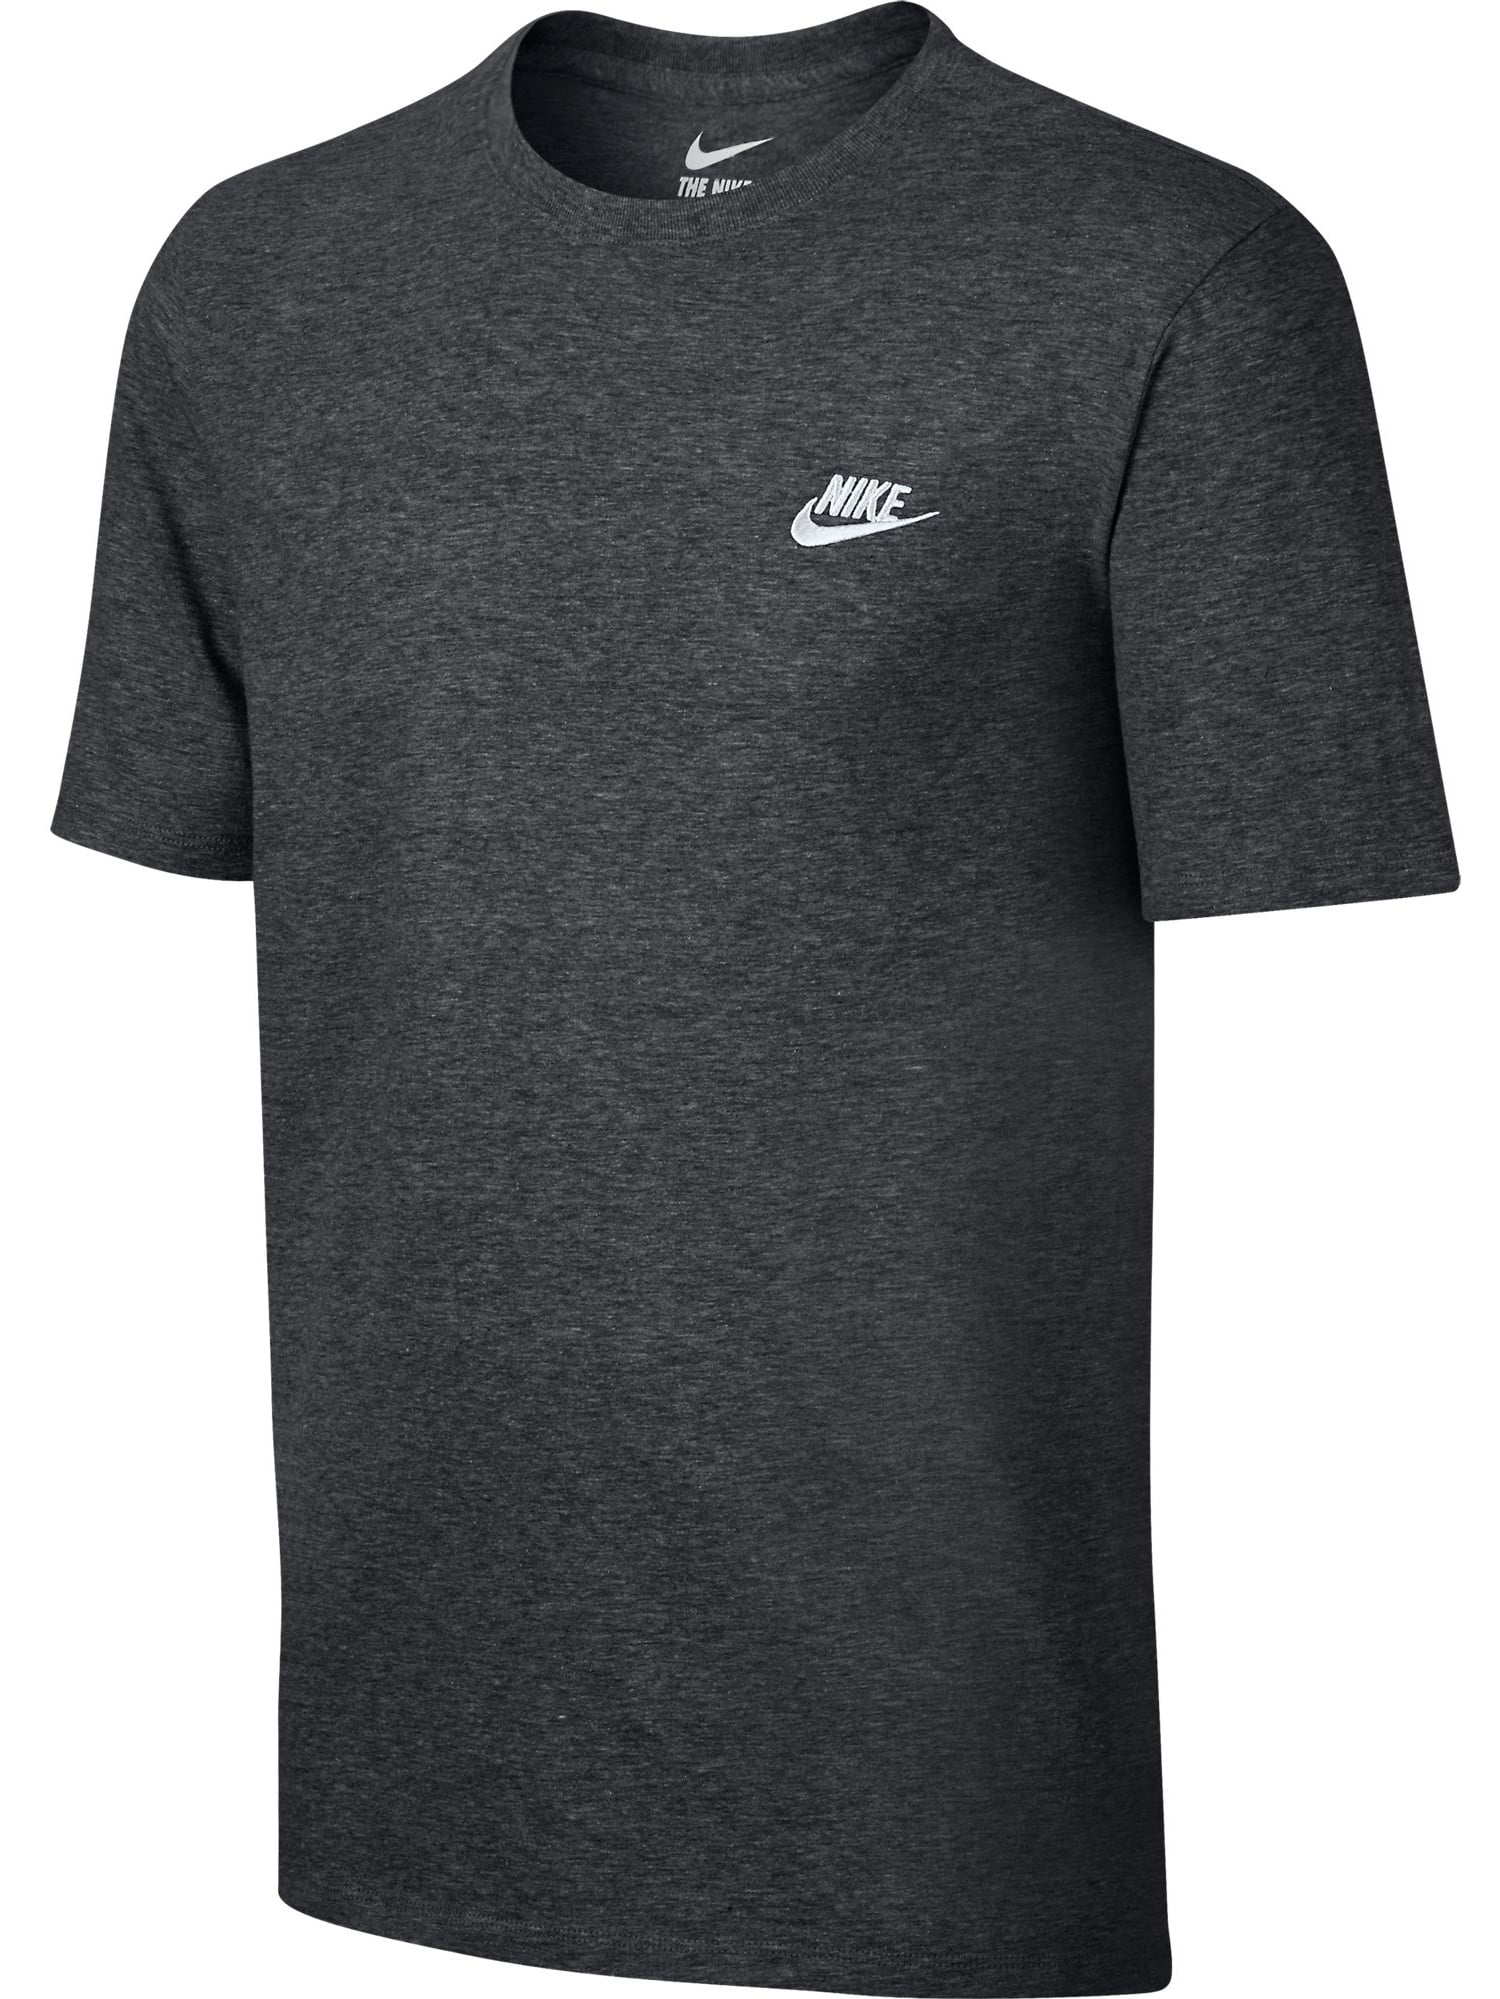 padre invadir Para aumentar Nike Men's Embroidered Swoosh T-Shirt Charcoal Heather/White 827021-071 -  Walmart.com